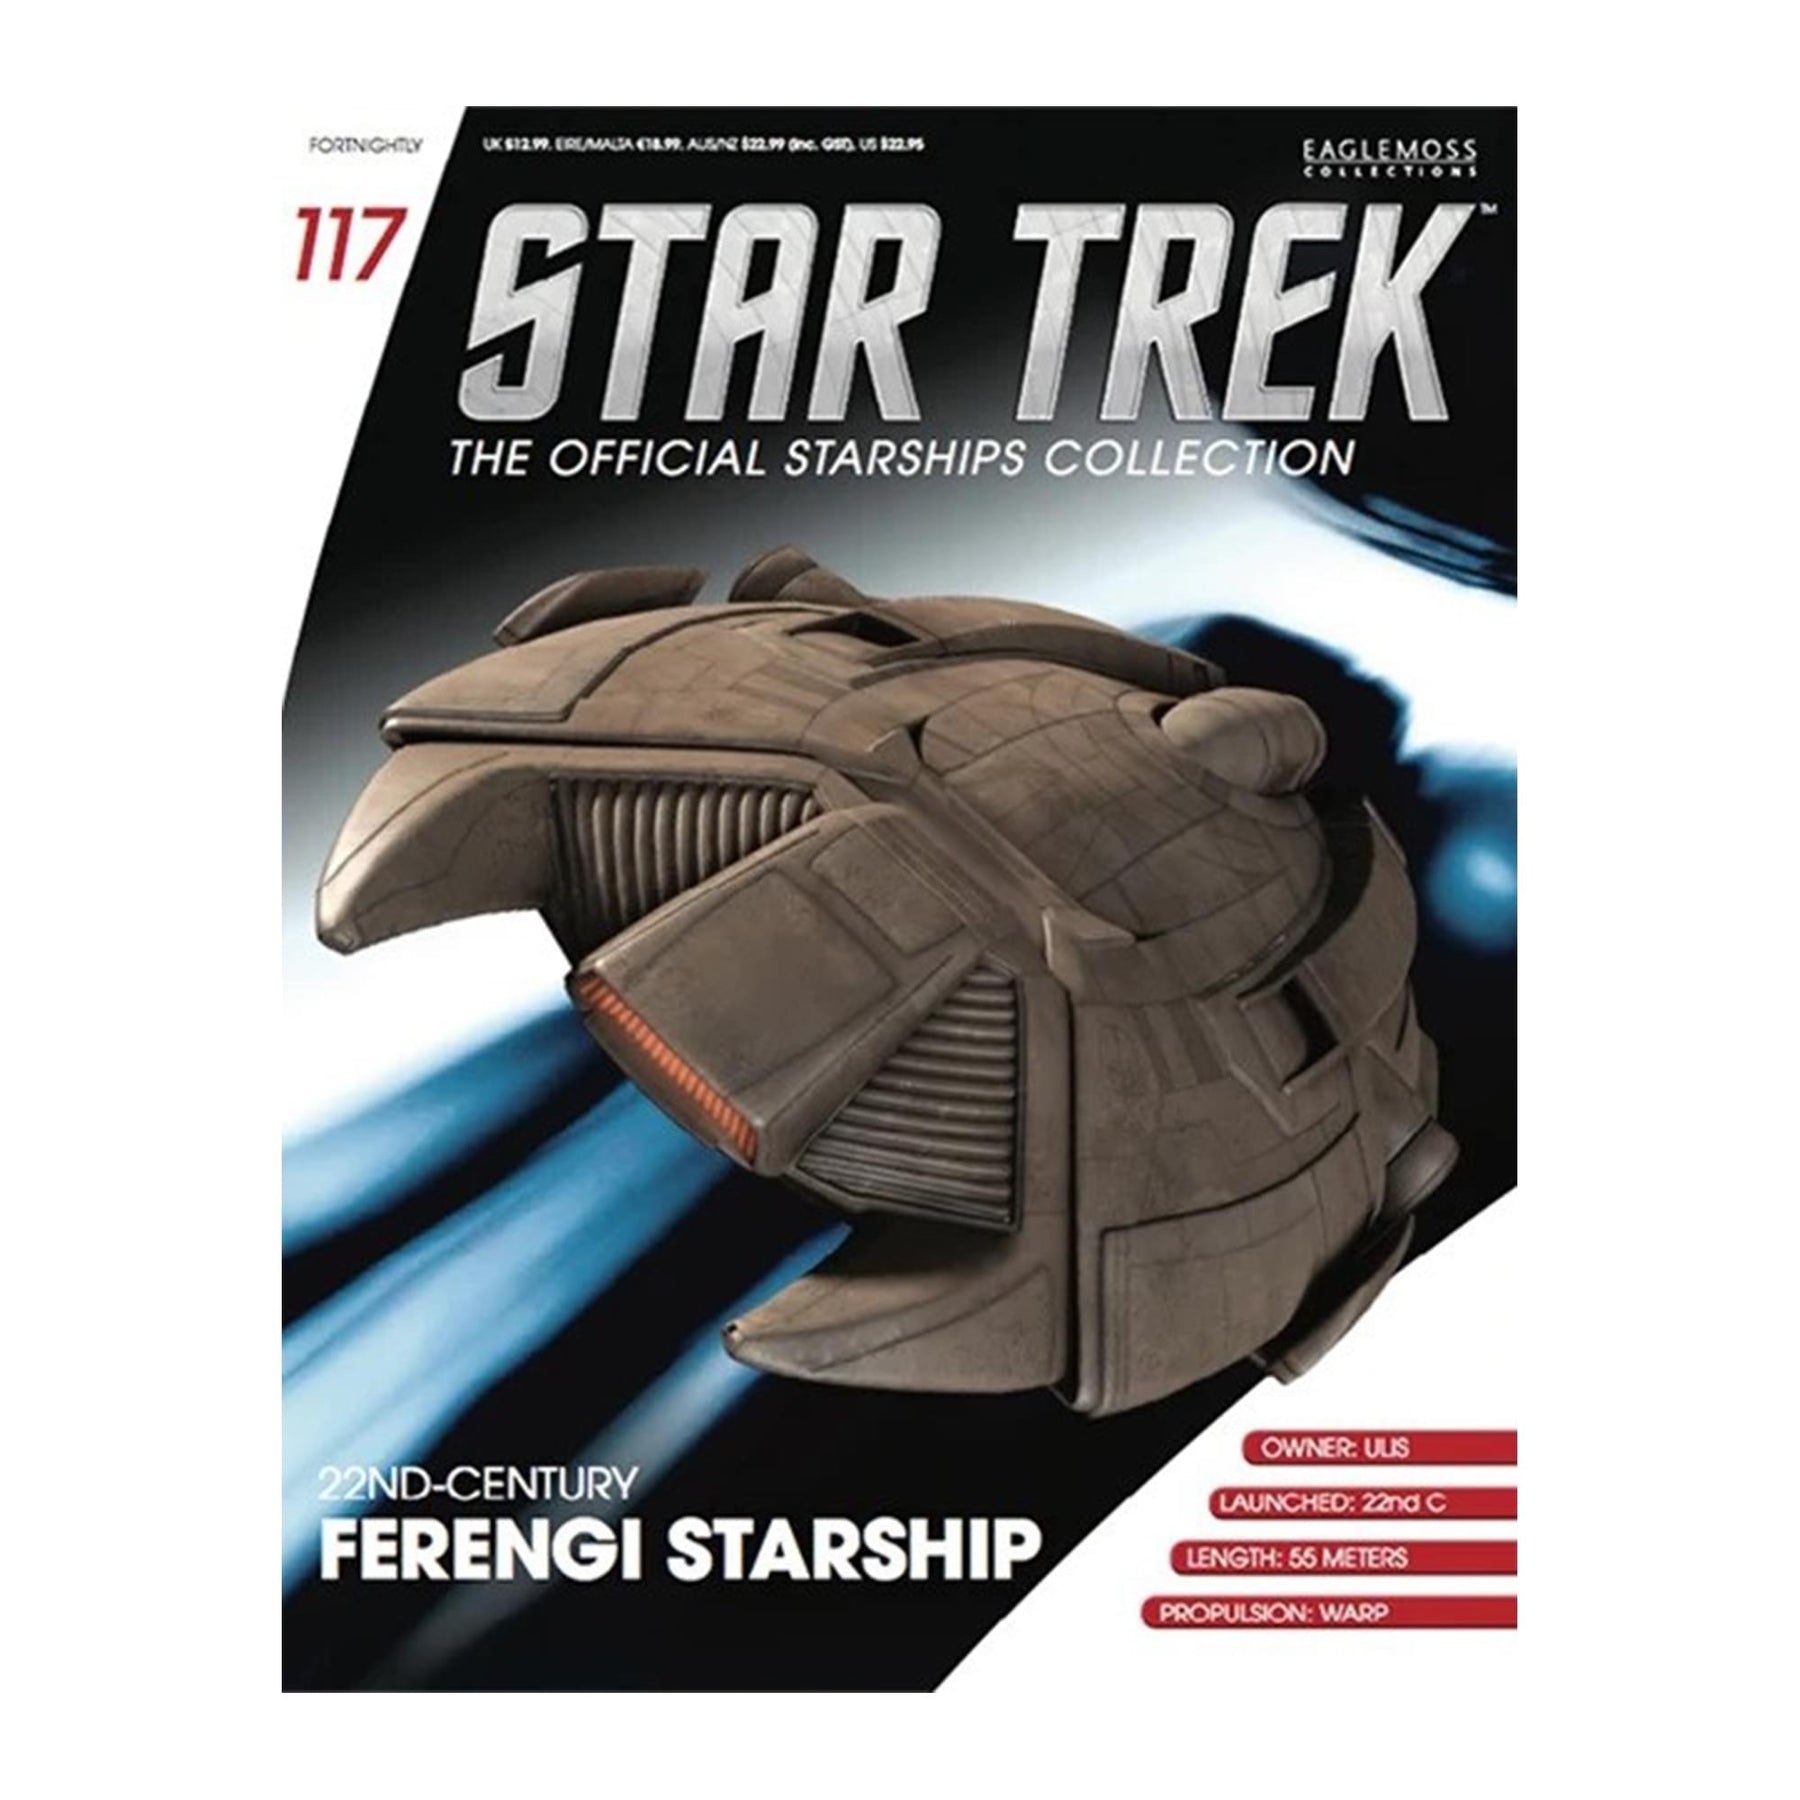 Eaglemoss Star Trek Starships 22nd Century Ferengi Ship Magazine Brand New